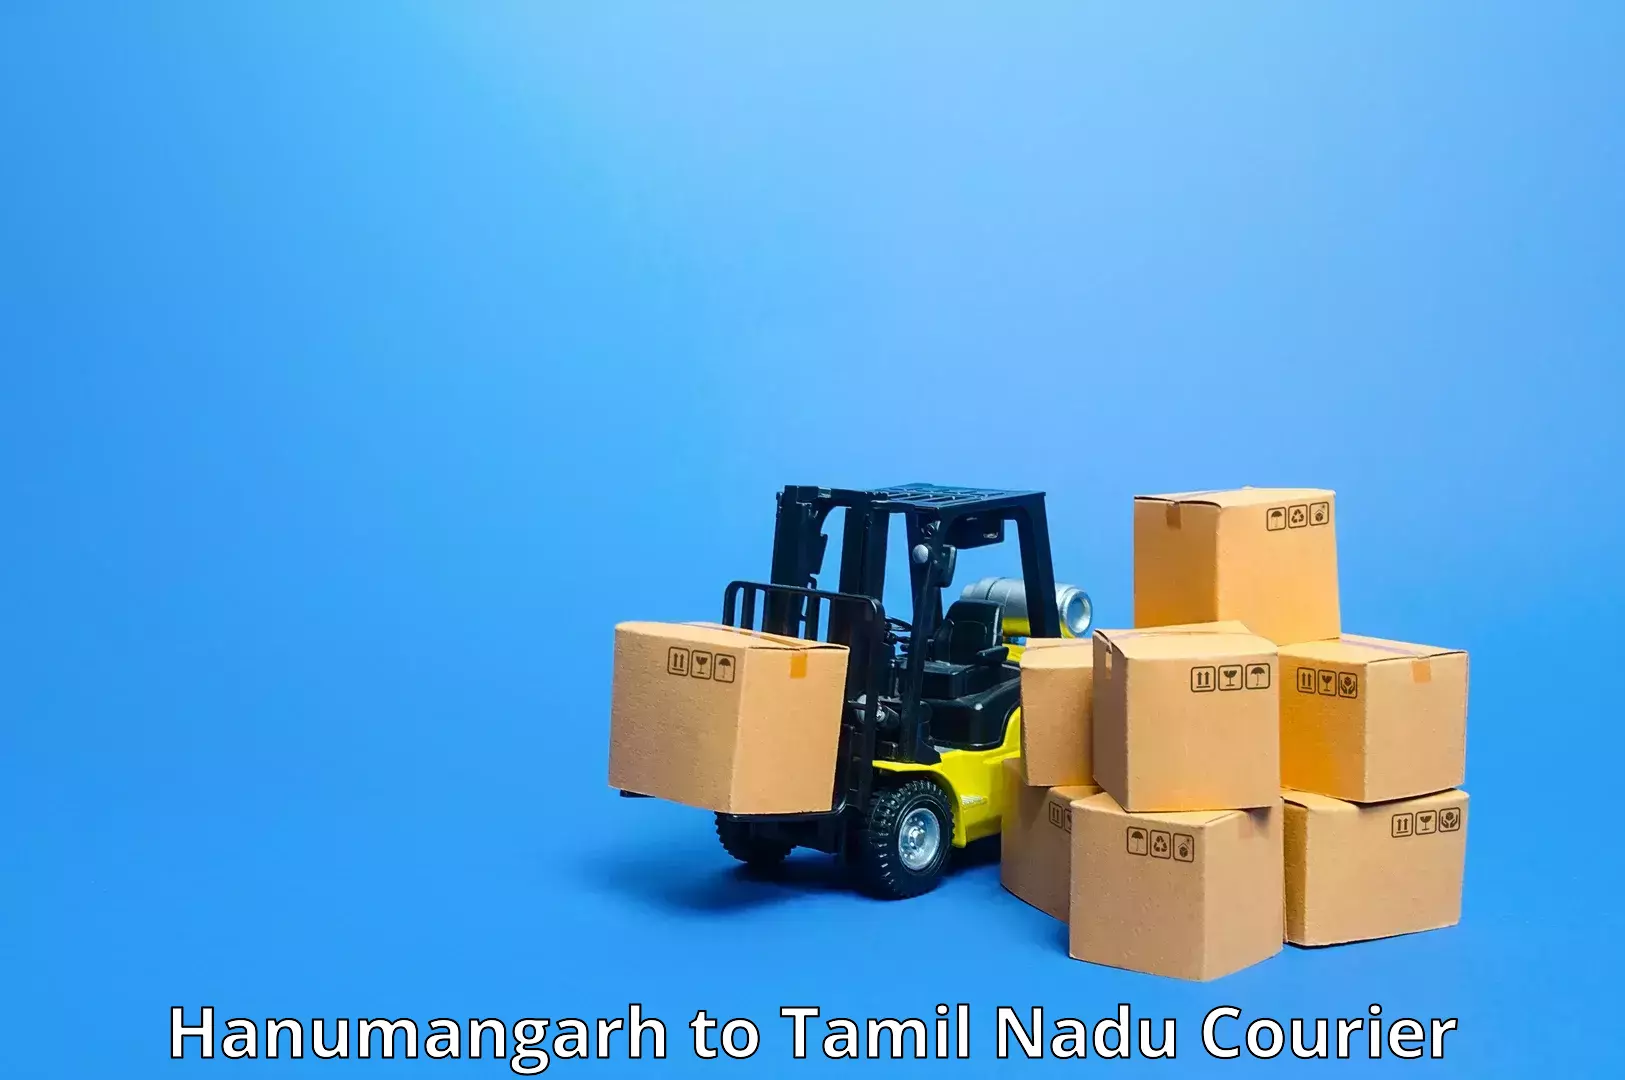 Digital courier platforms Hanumangarh to Avadi